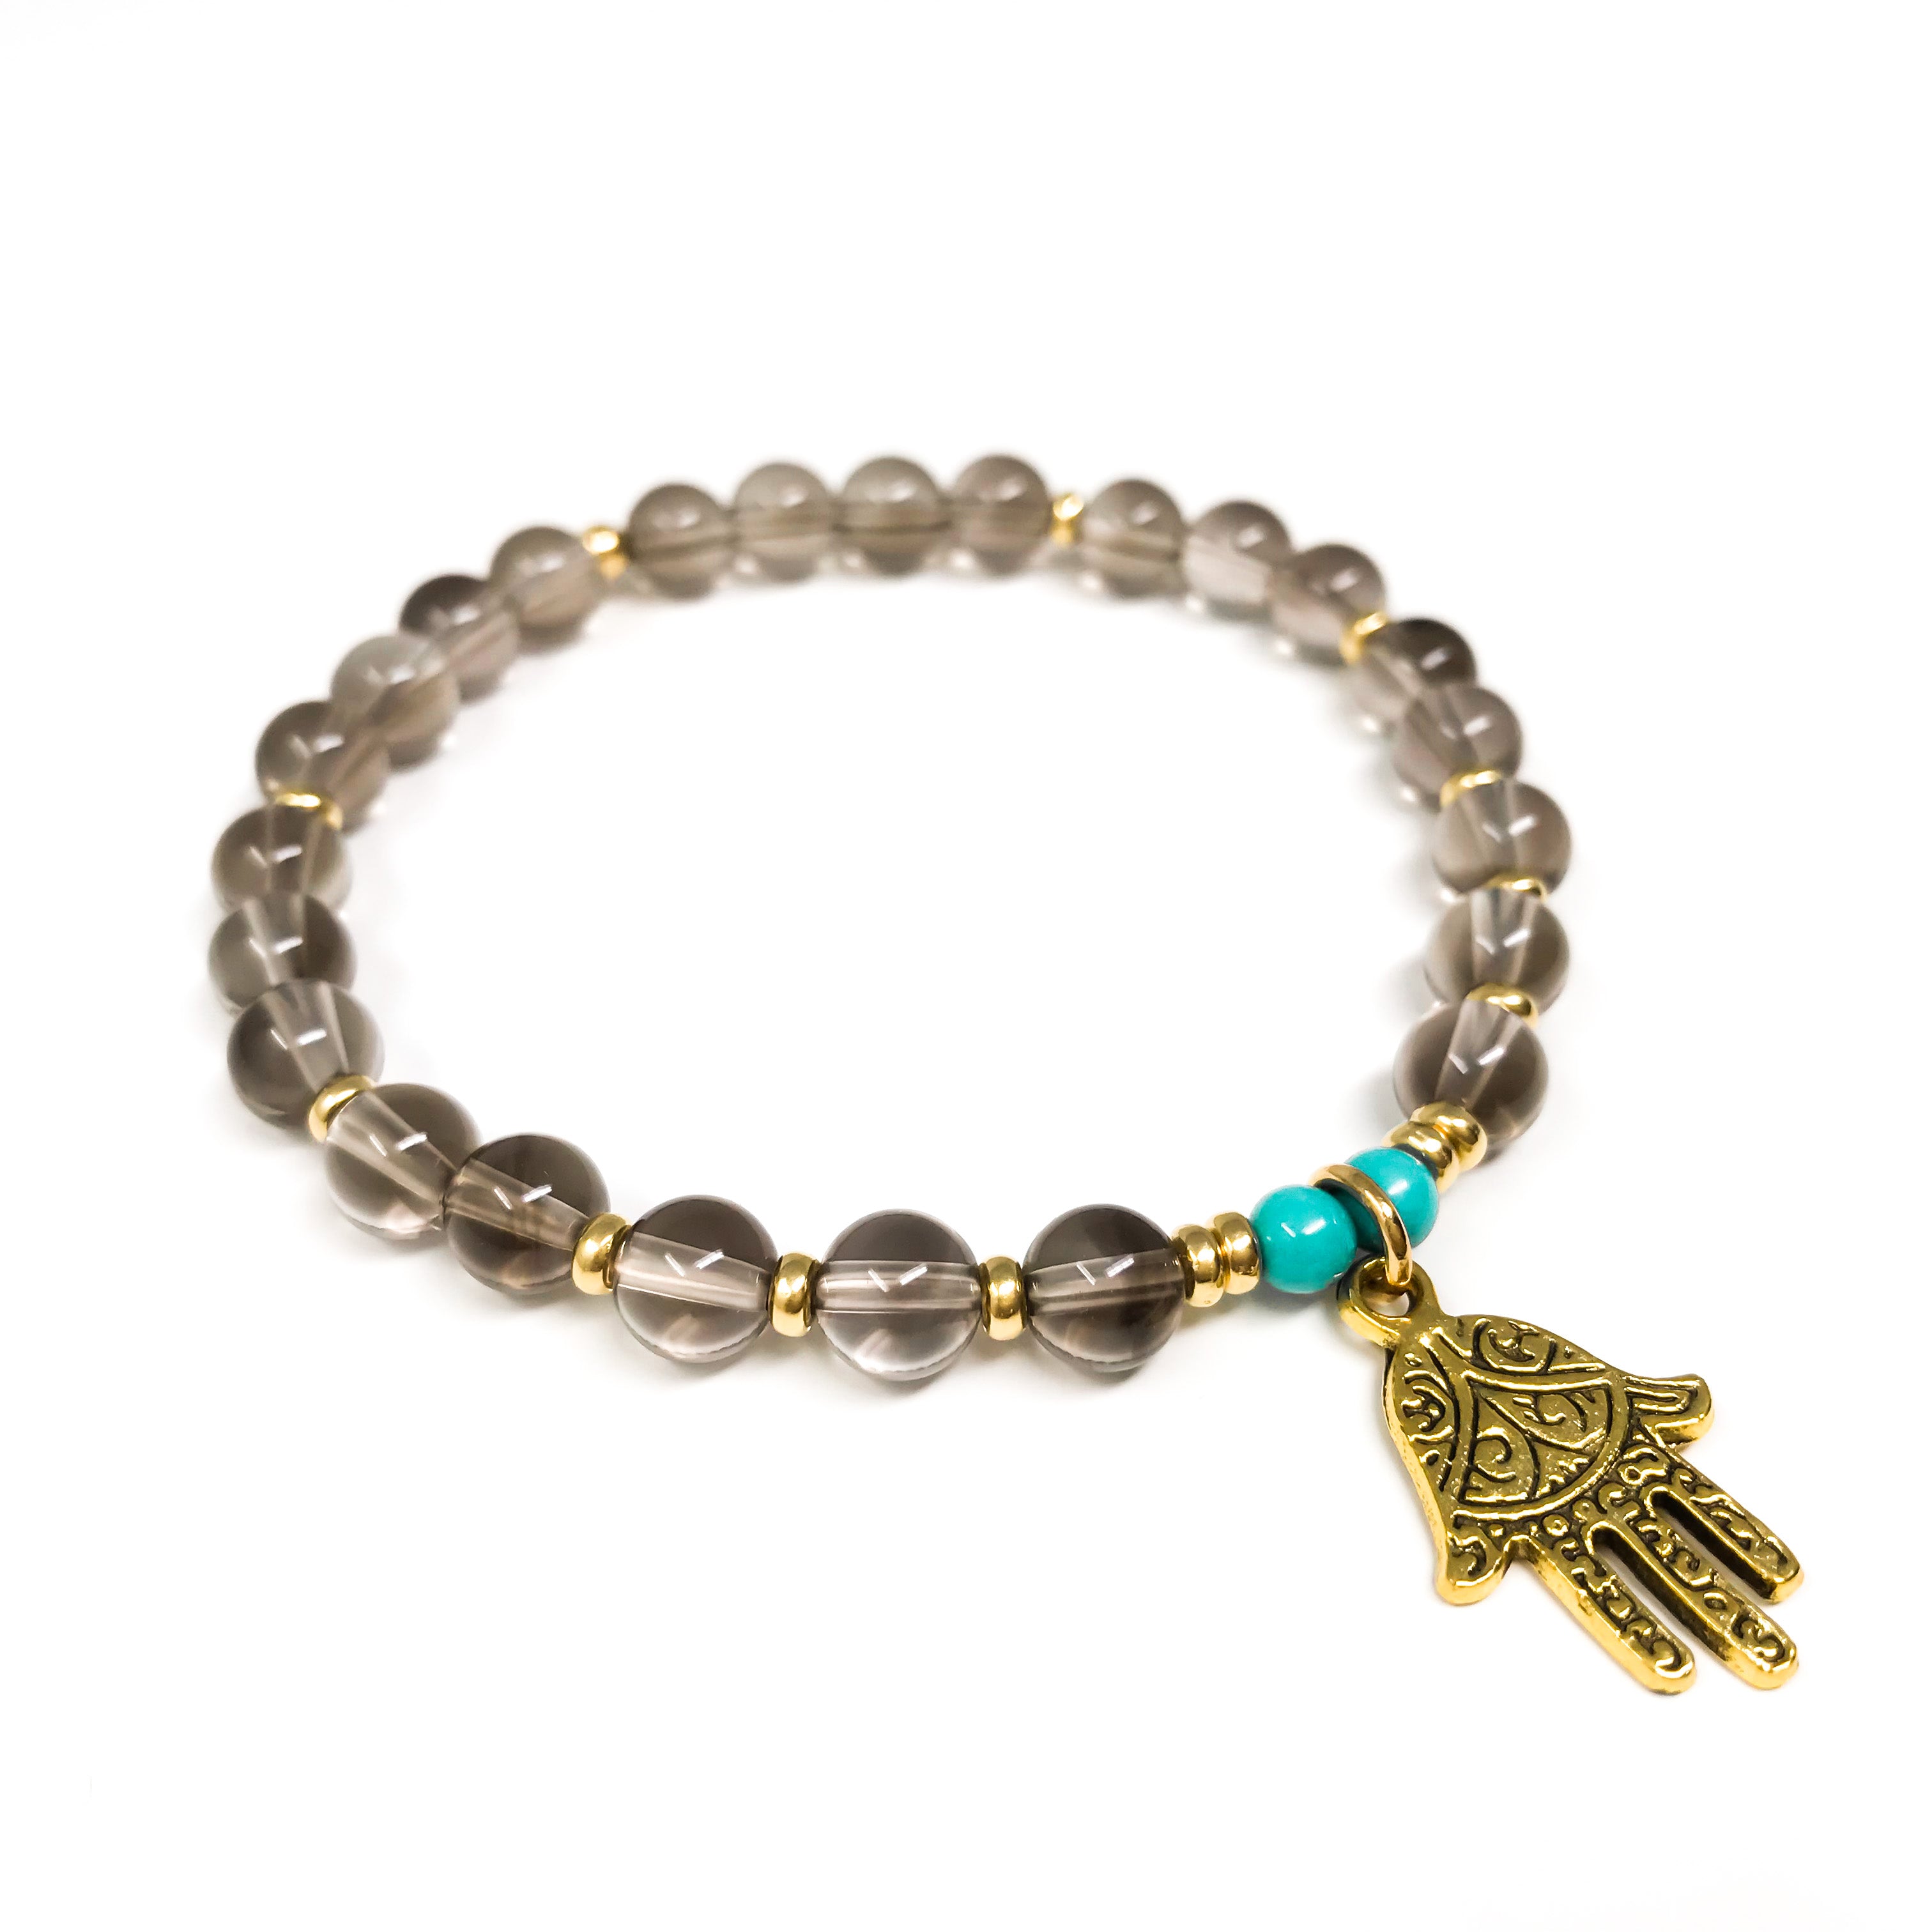 Smoky Quartz & Turquoise Mala Bracelet with Hamsa Hand Charm, Yoga Bracelet for Protection and Strength